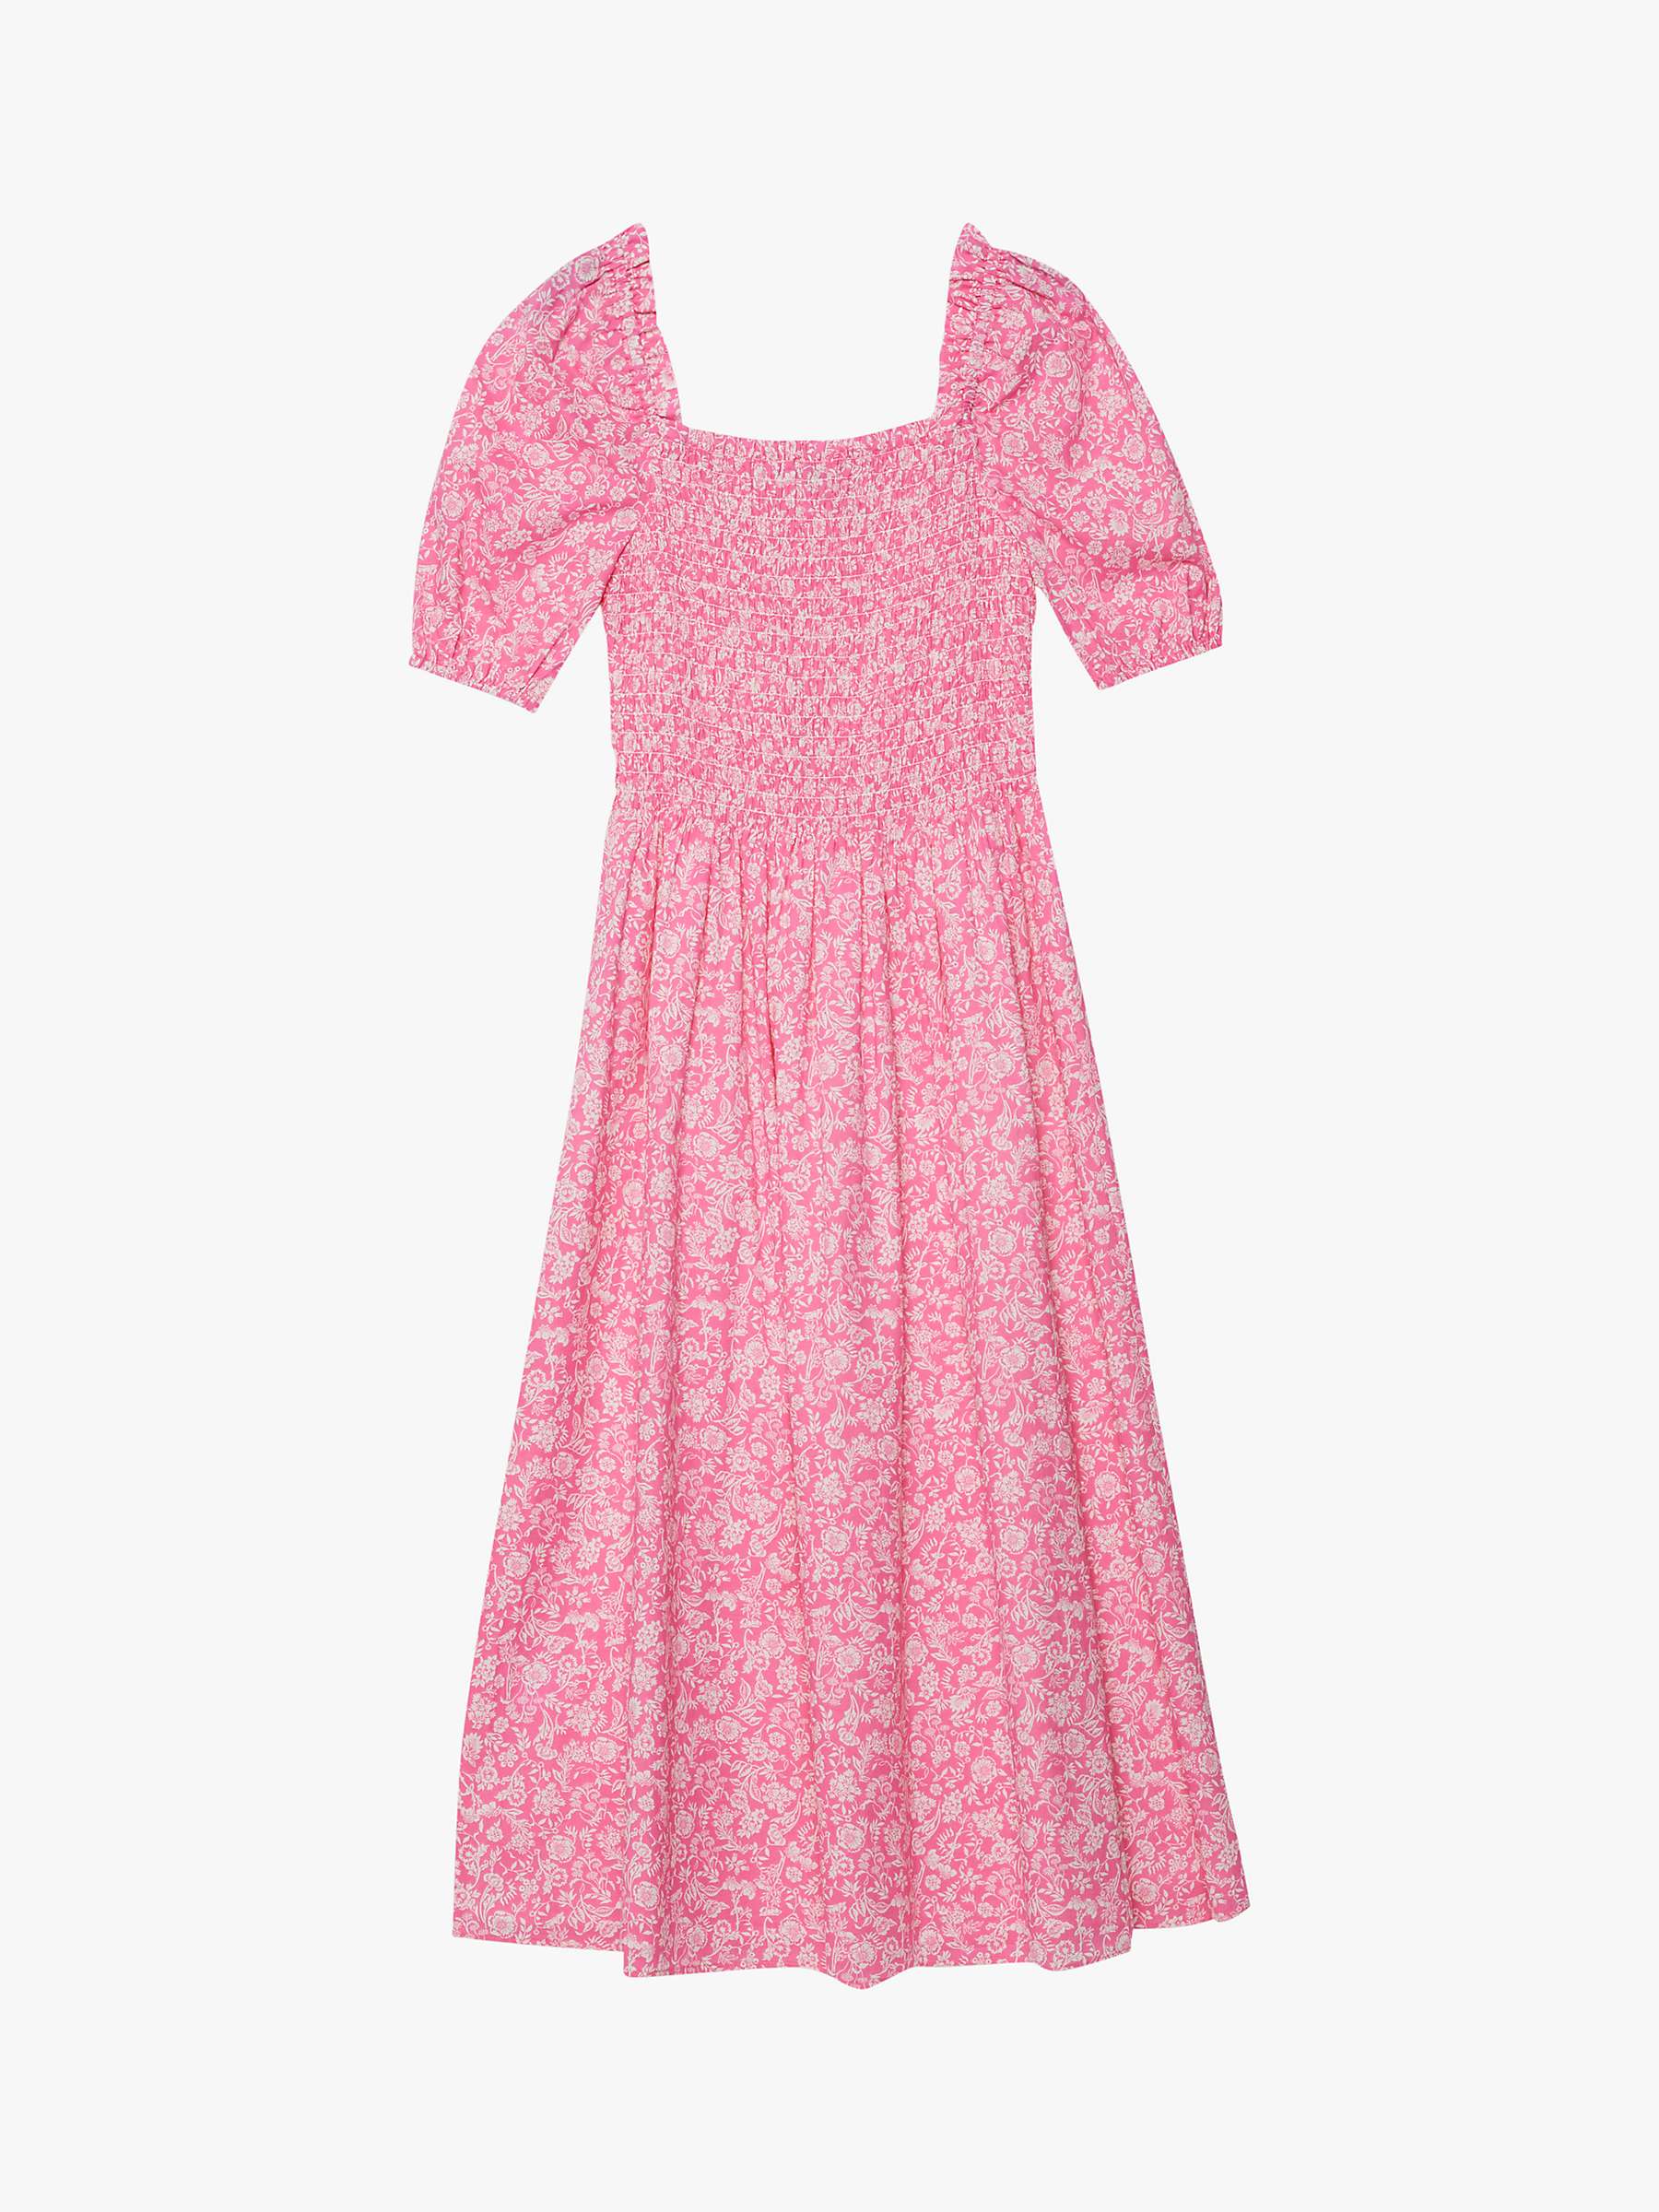 Albaray Ornate Floral Print Midi Dress, Pink at John Lewis & Partners